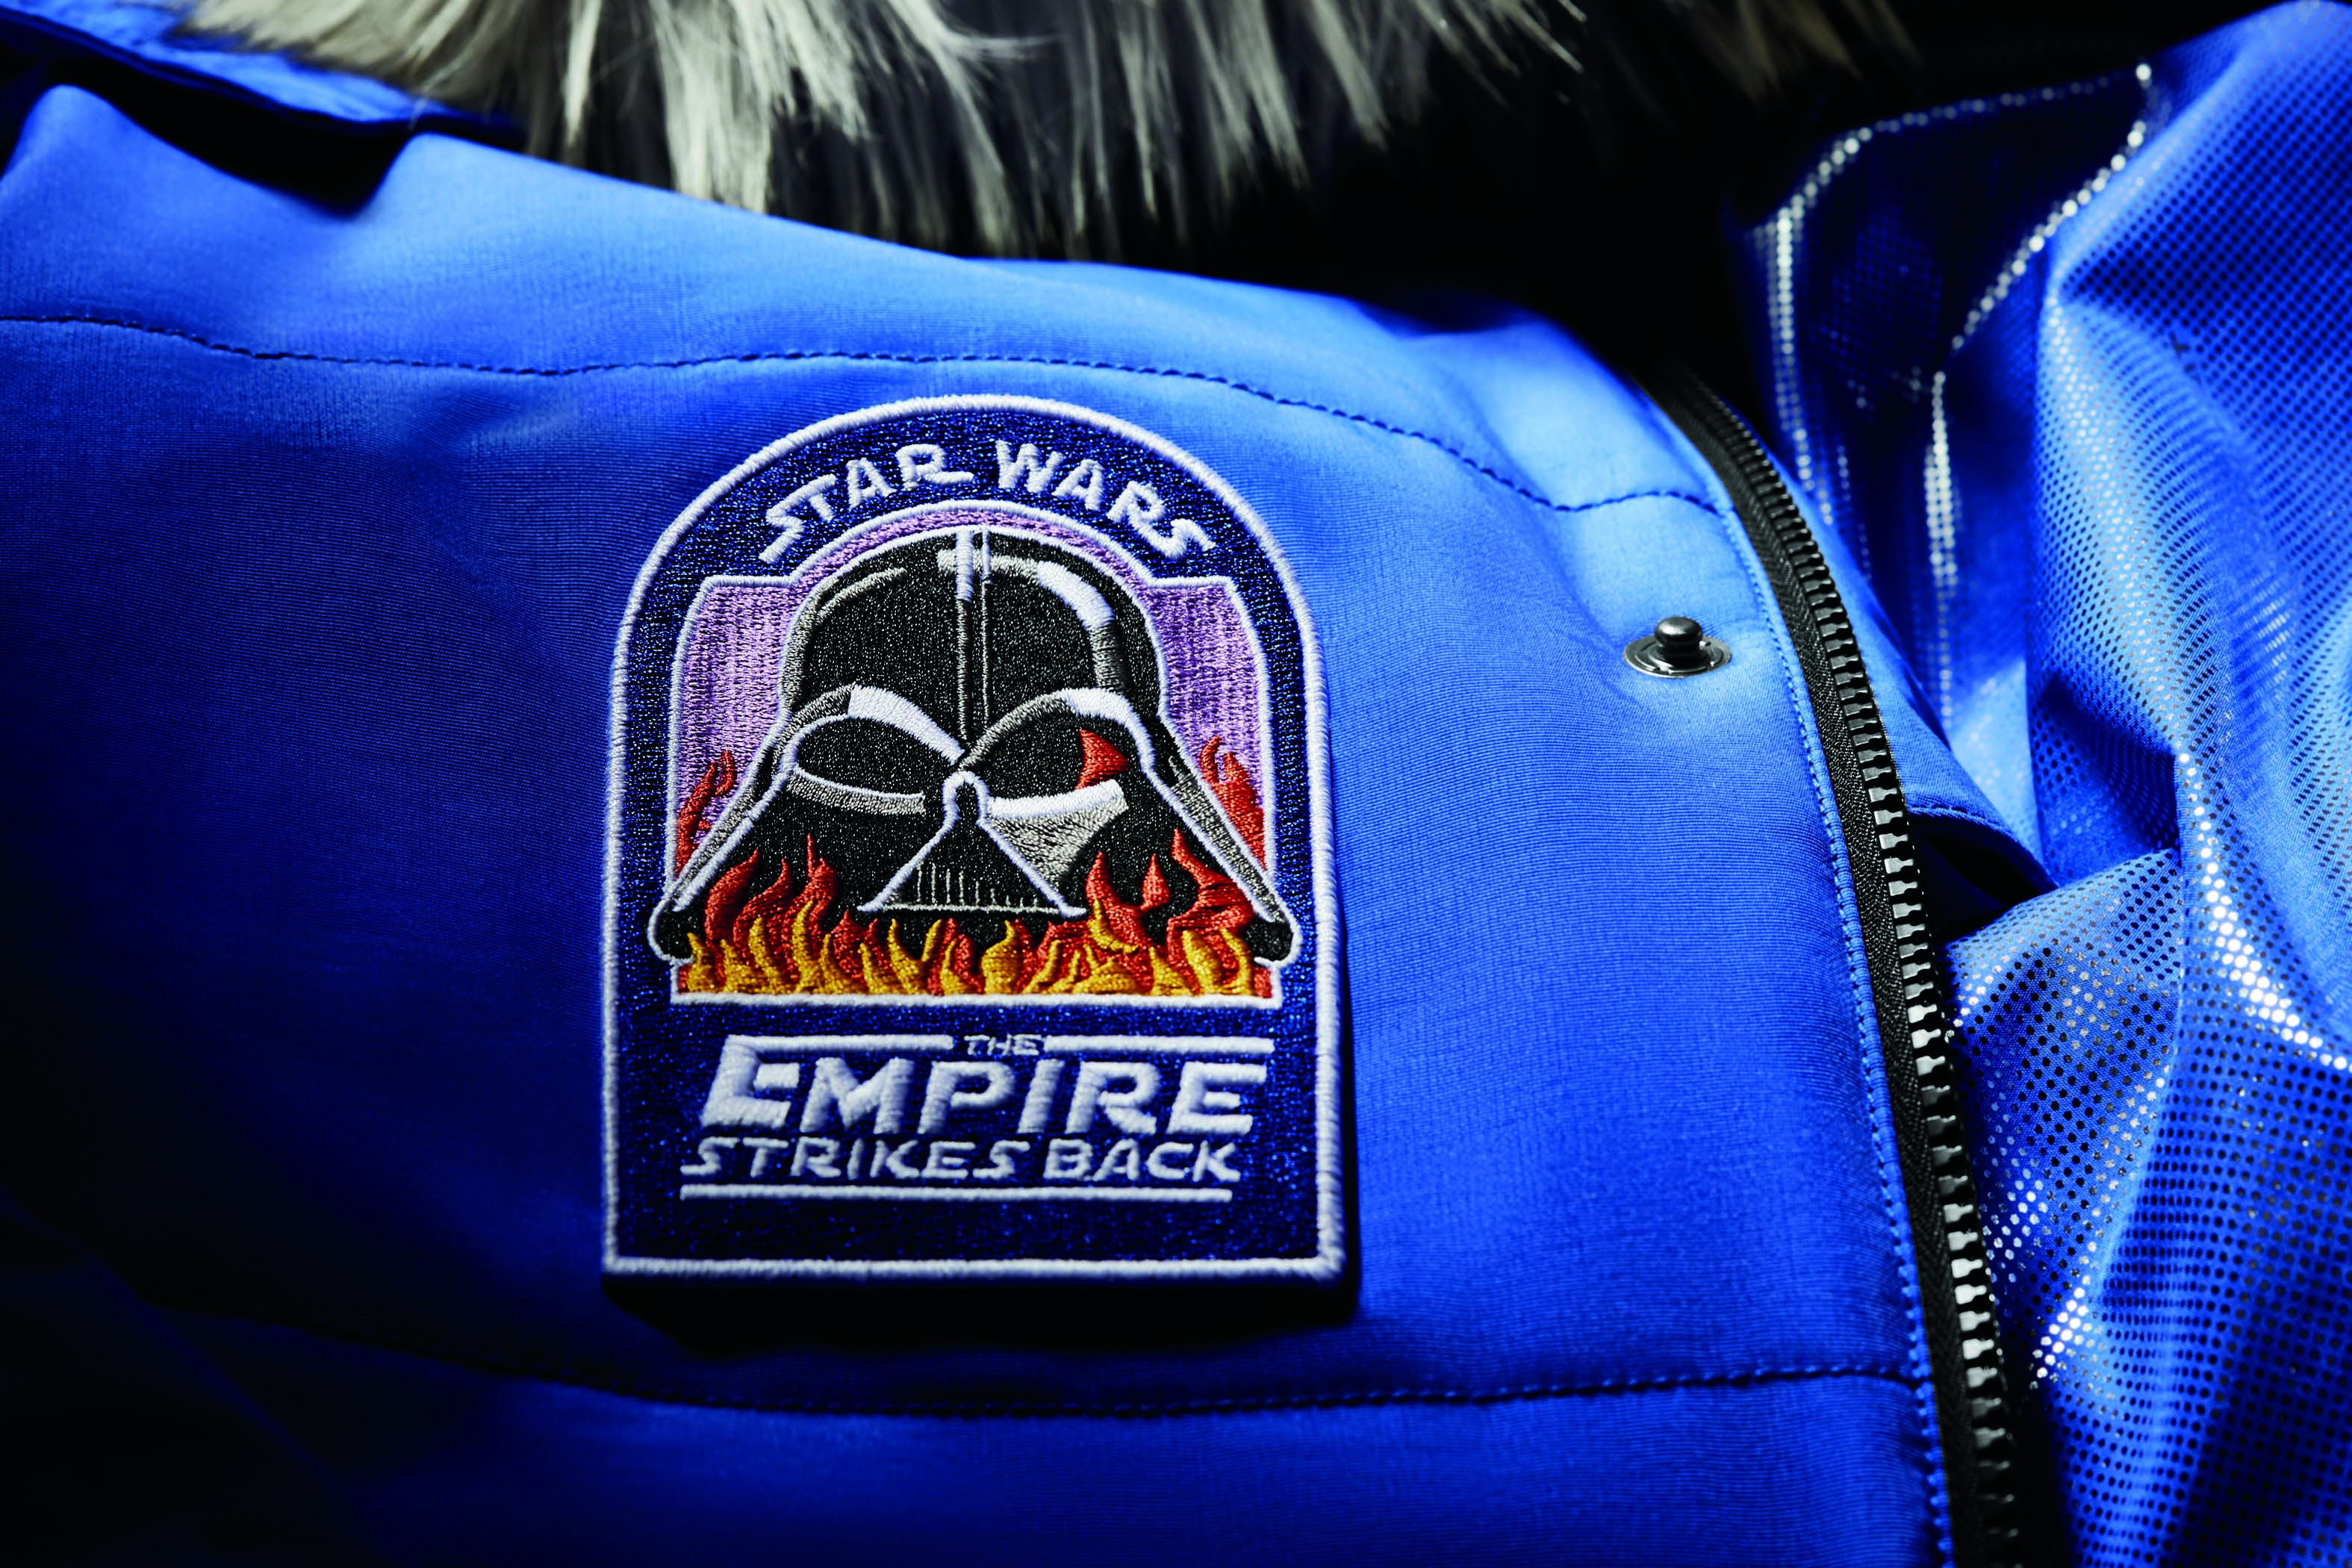 star wars crew jacket columbia